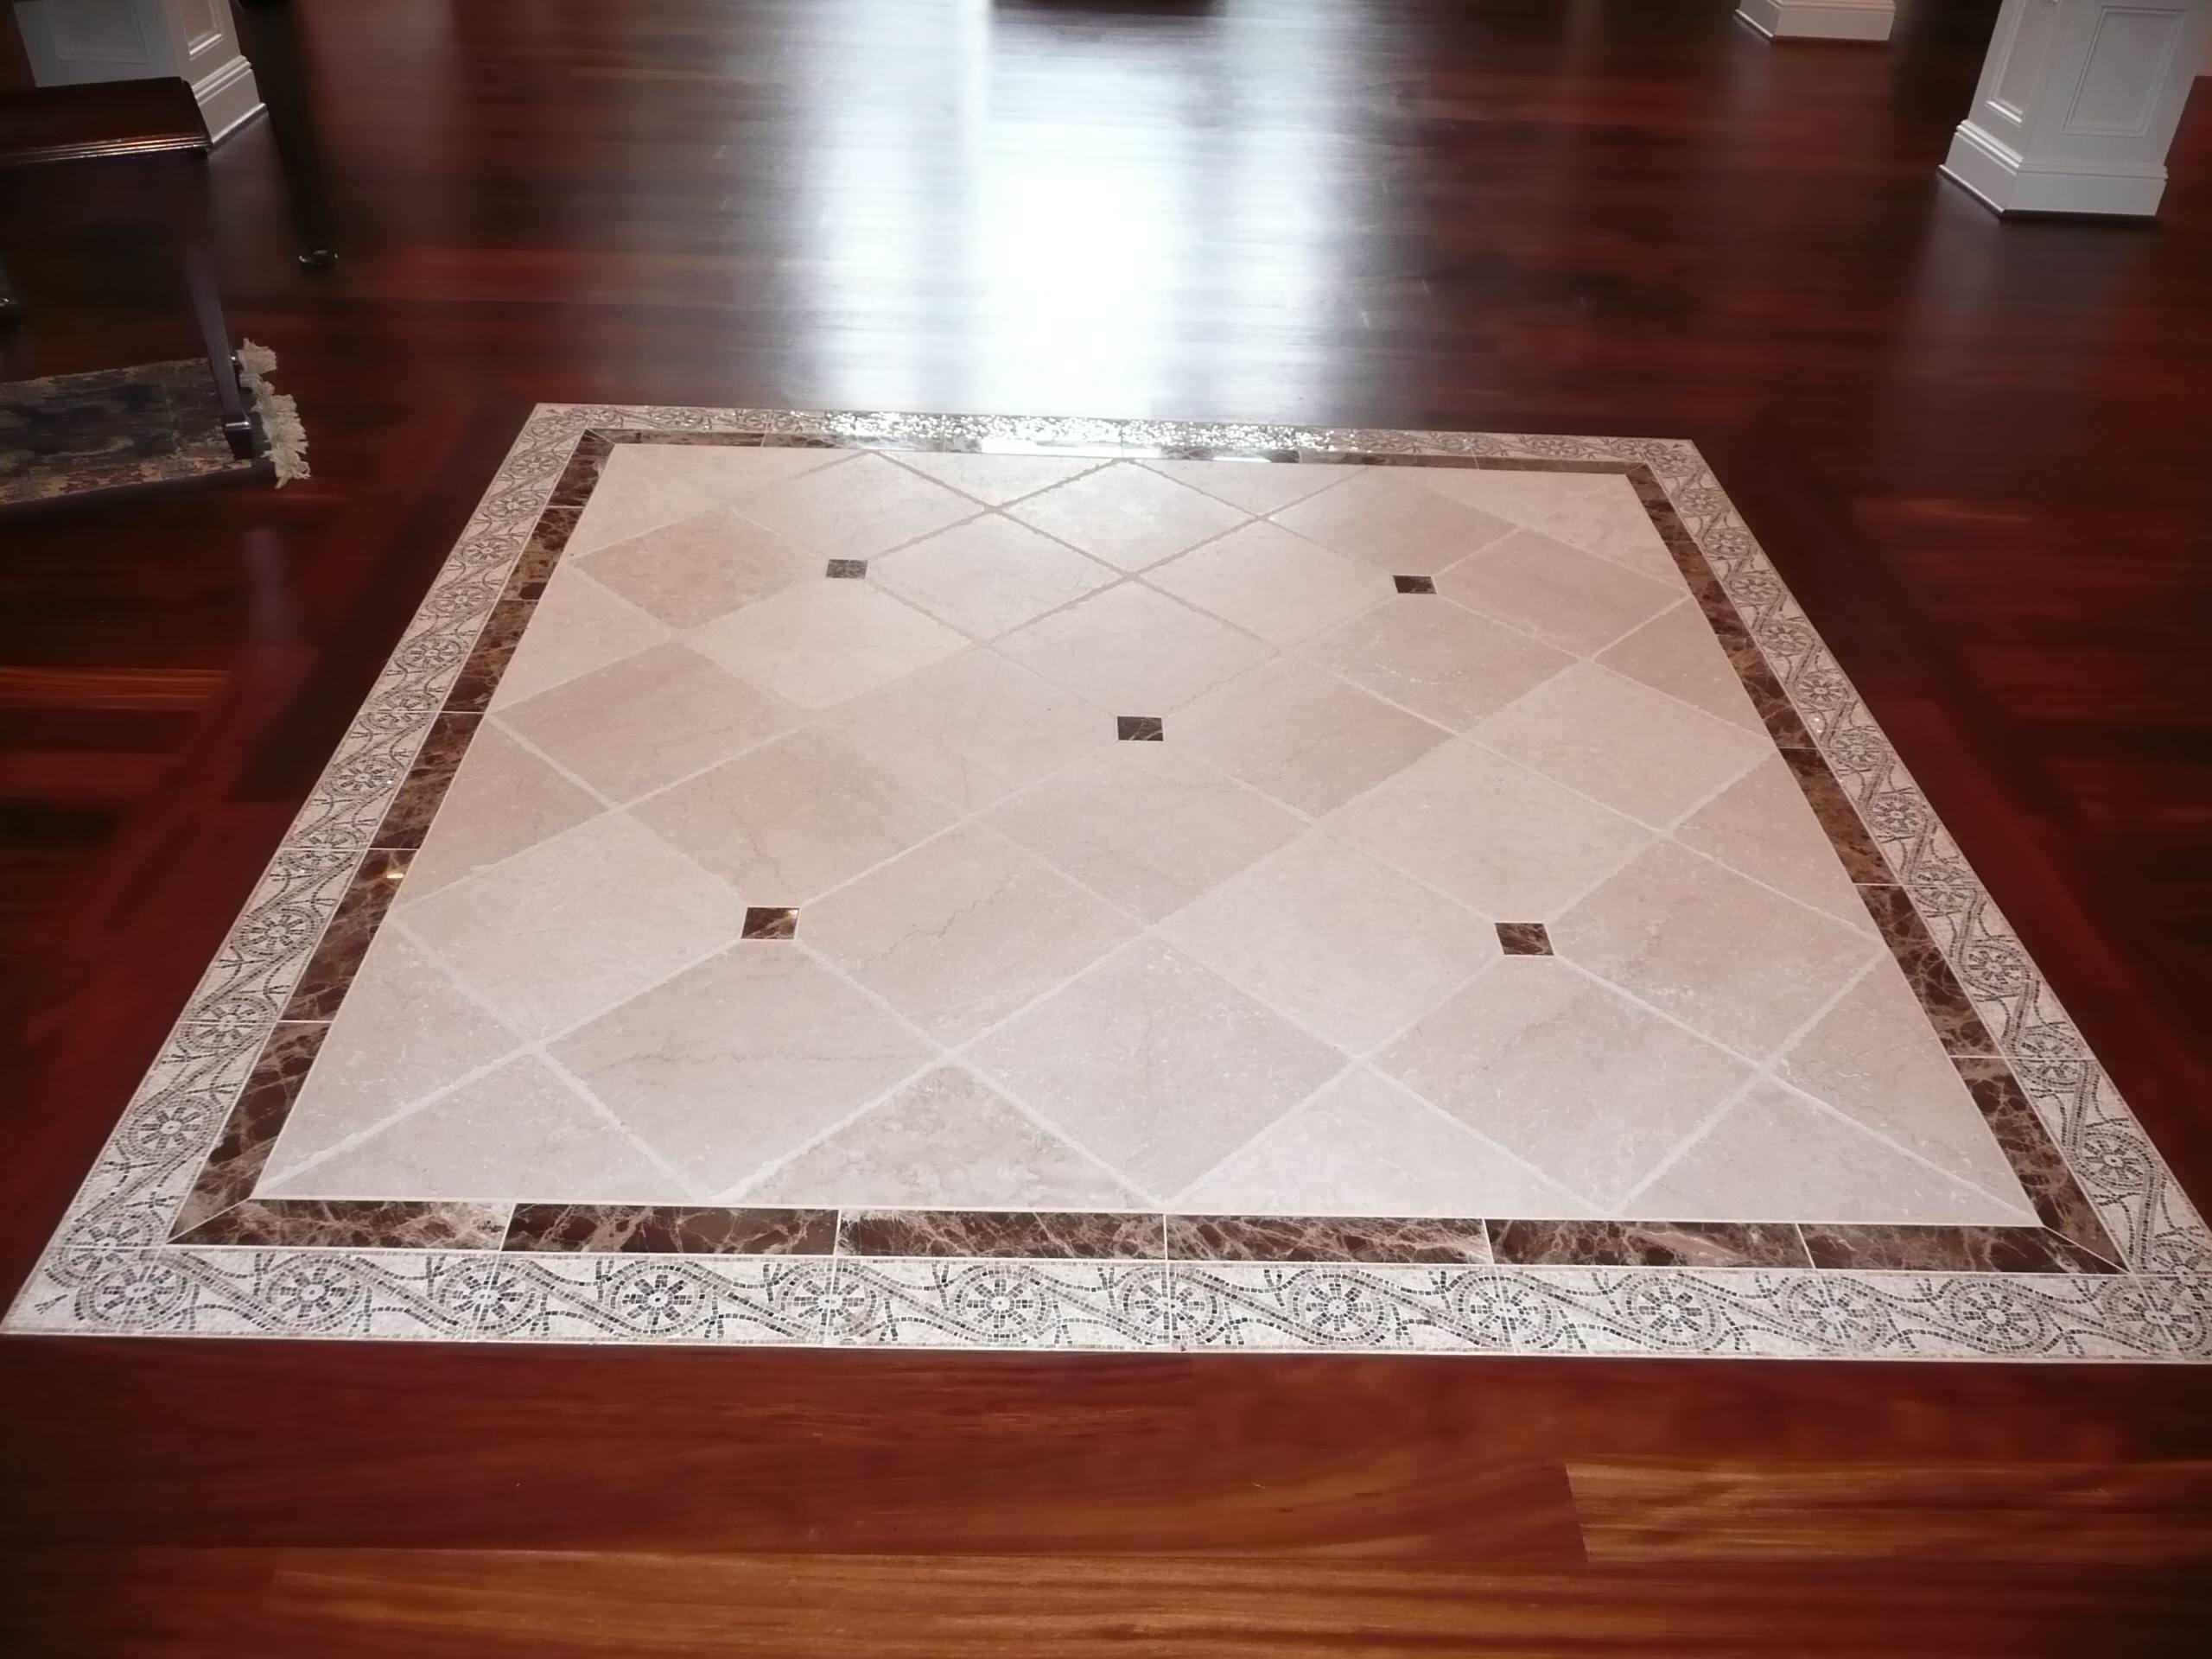 Wood Floor With Tile Inlay Houzz, Tile Inlay In Wood Floor Kitchen